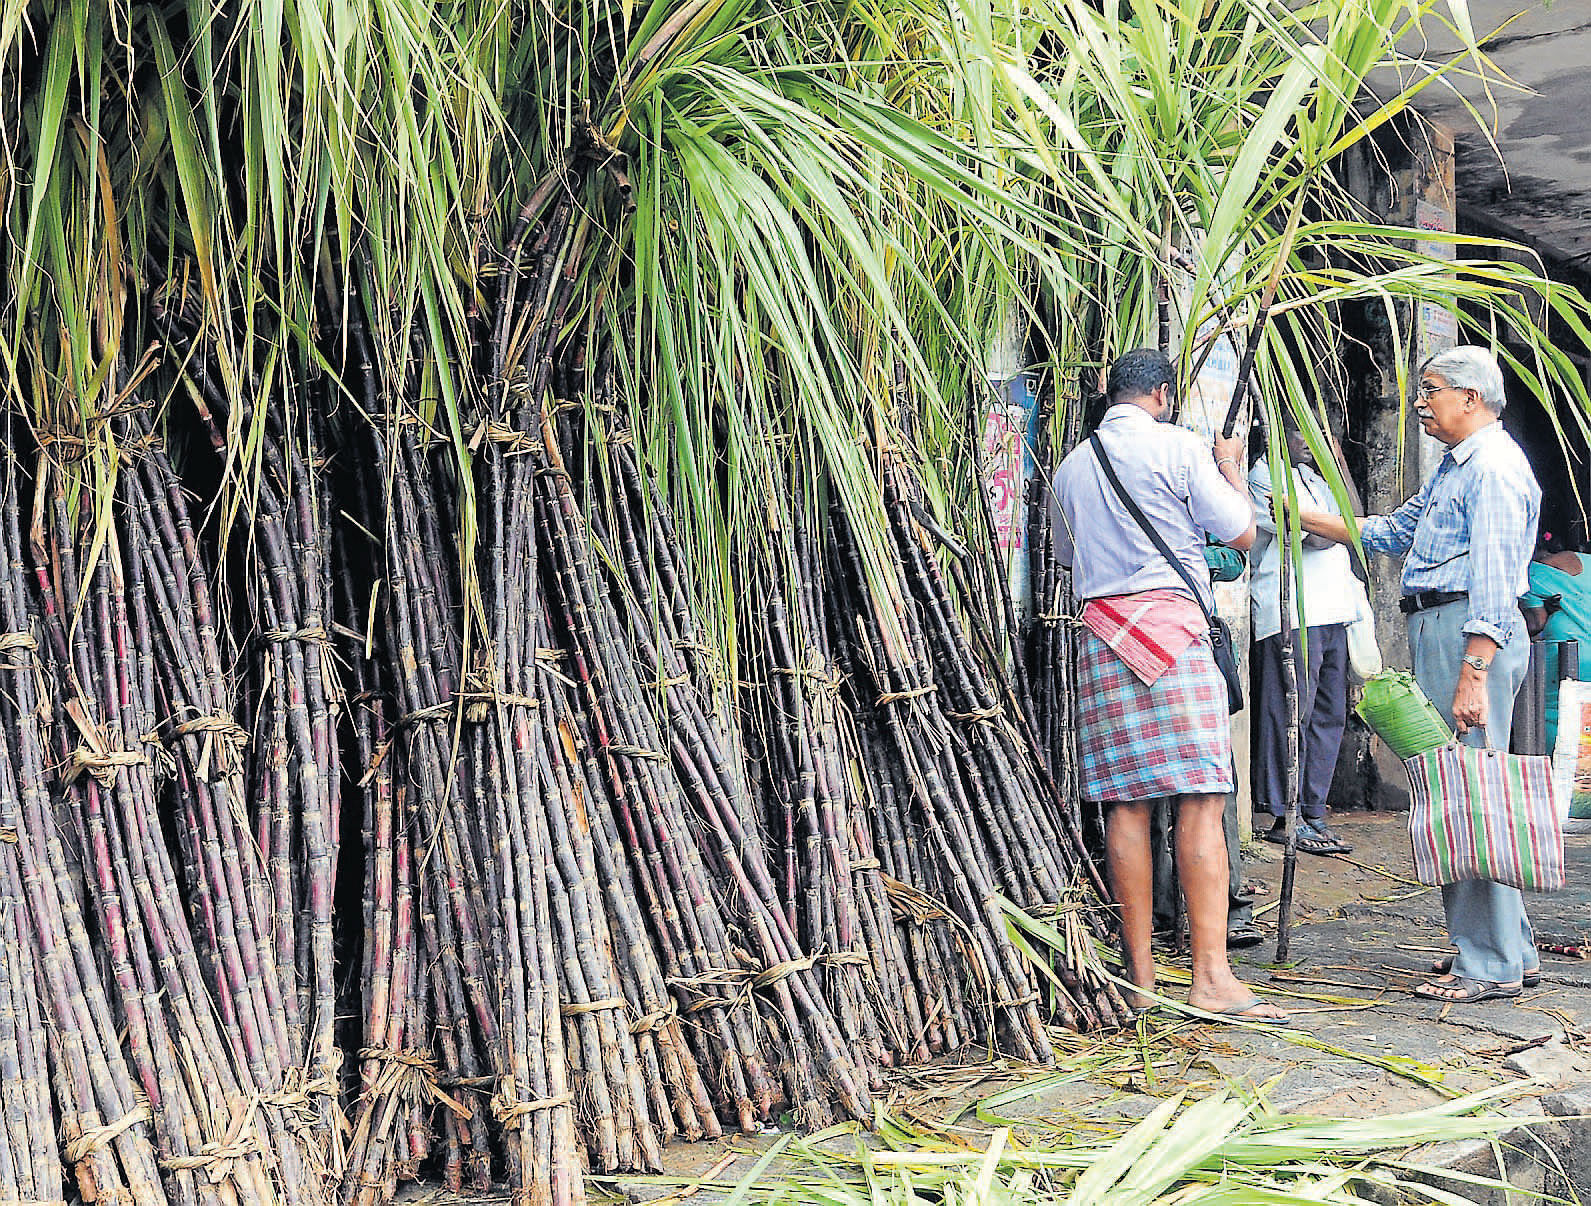 Sugarcane. DH file photo